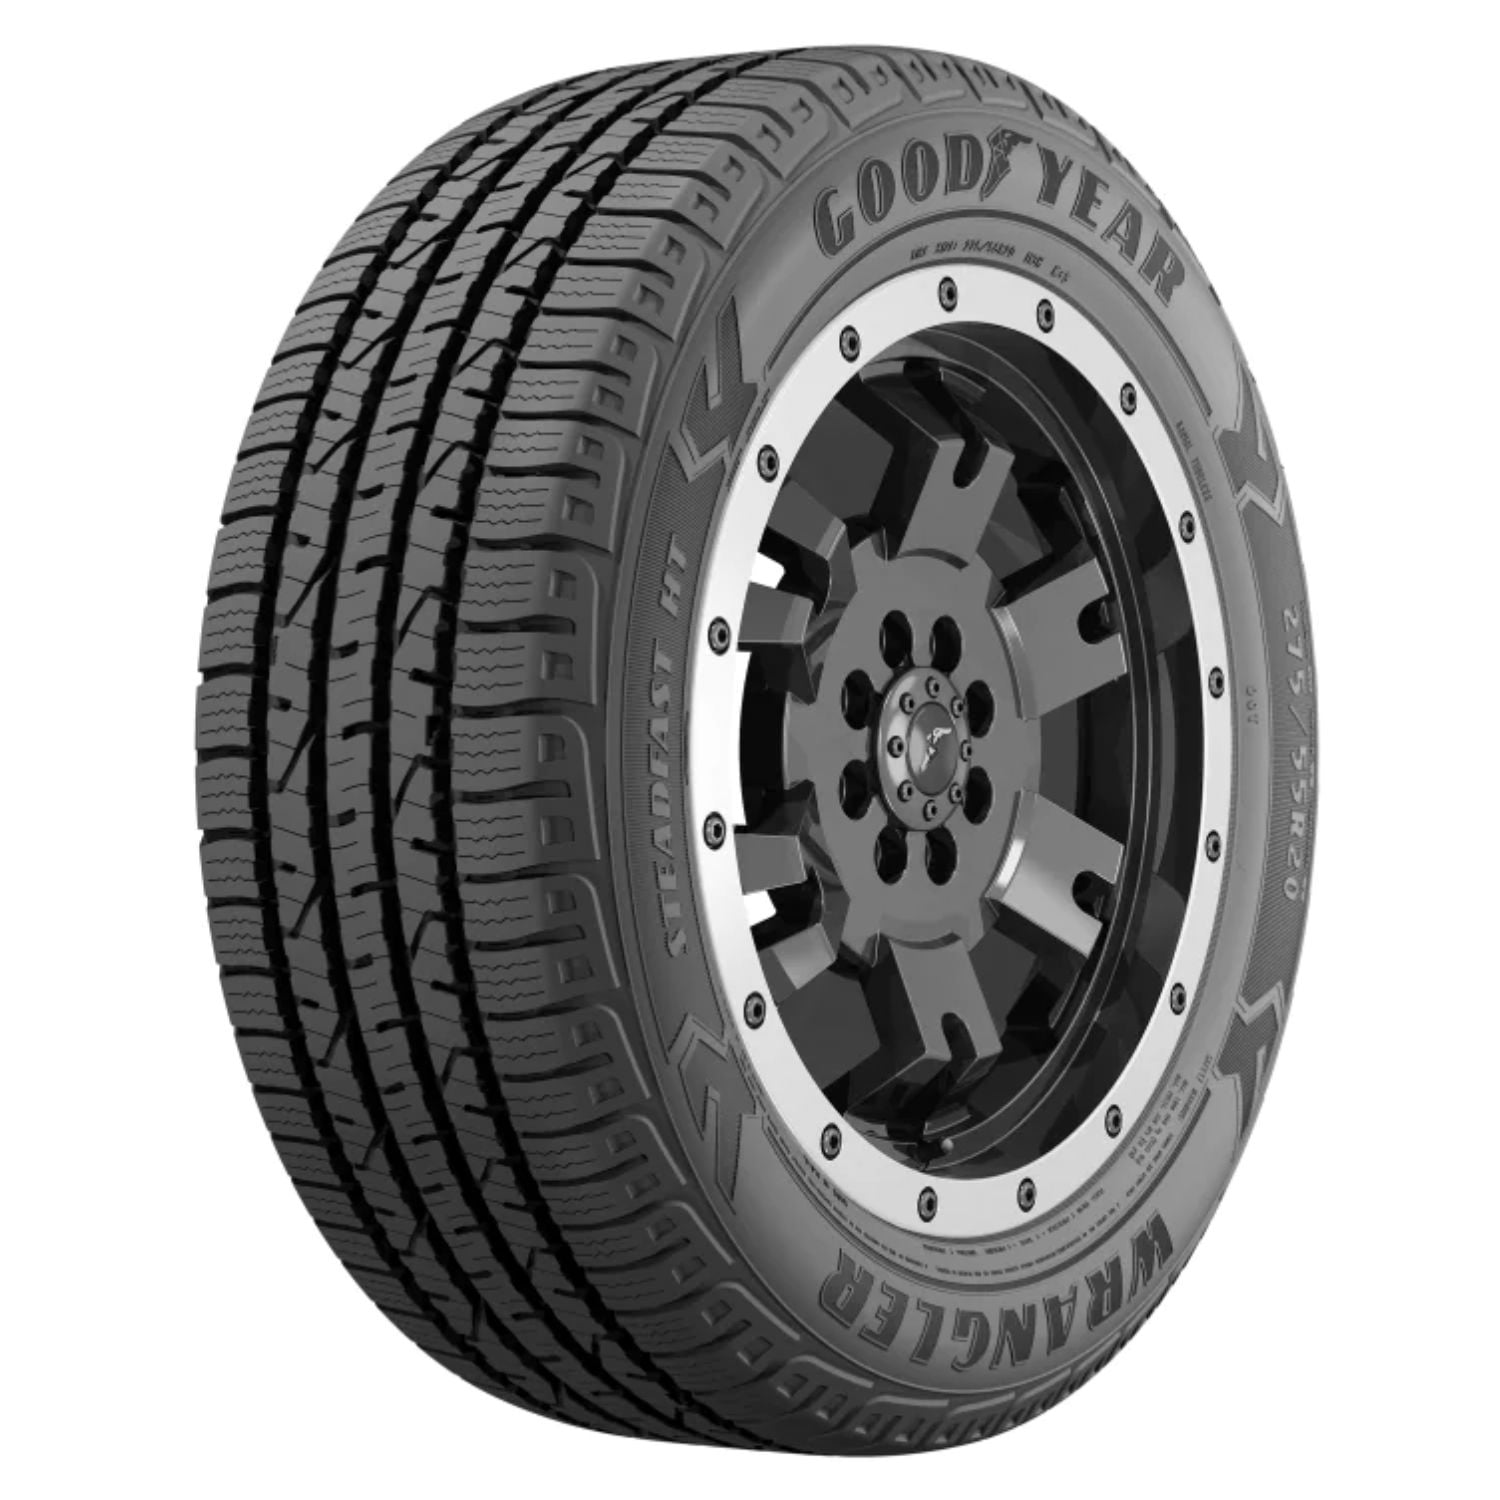 Goodyear Wrangler Steadfast HT All Season 275/55R20 113H Light Truck Tire -  